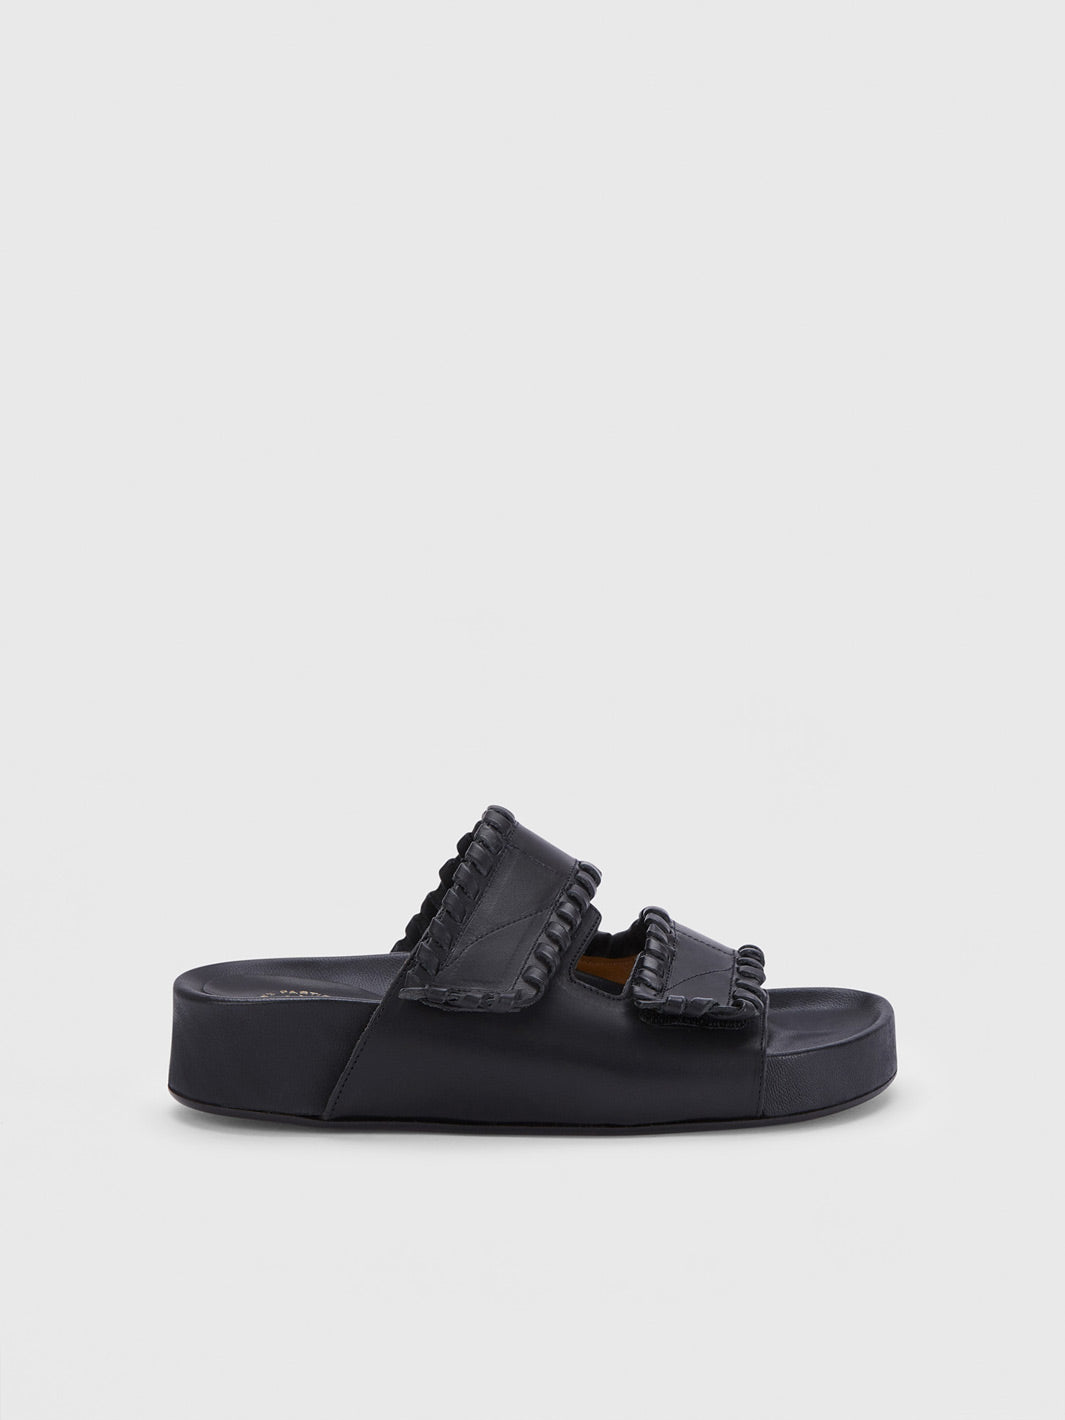 Furlo Stitch Black Leather Comfy sandals